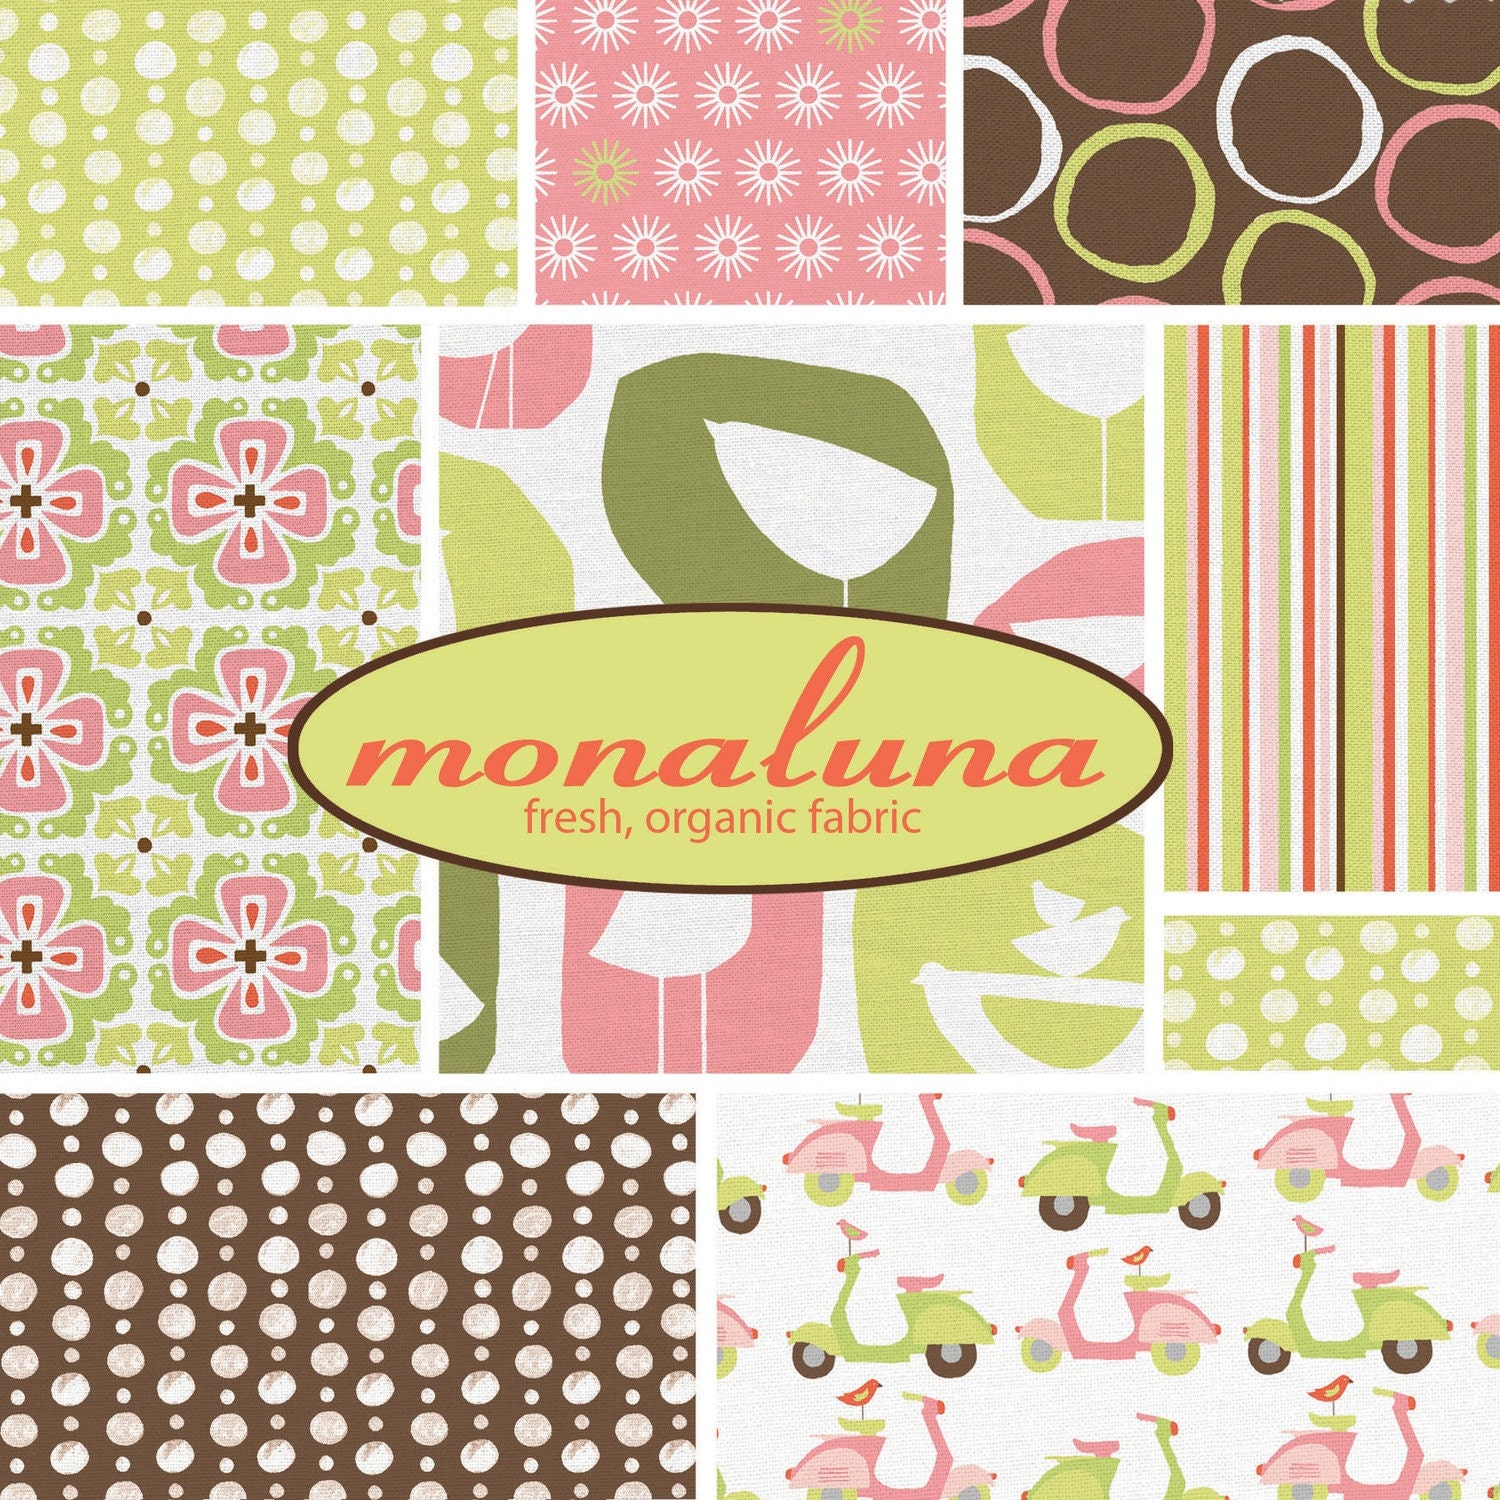 Organic Cotton Fabric, Monaco in Pink, by Monaluna, half yard Set